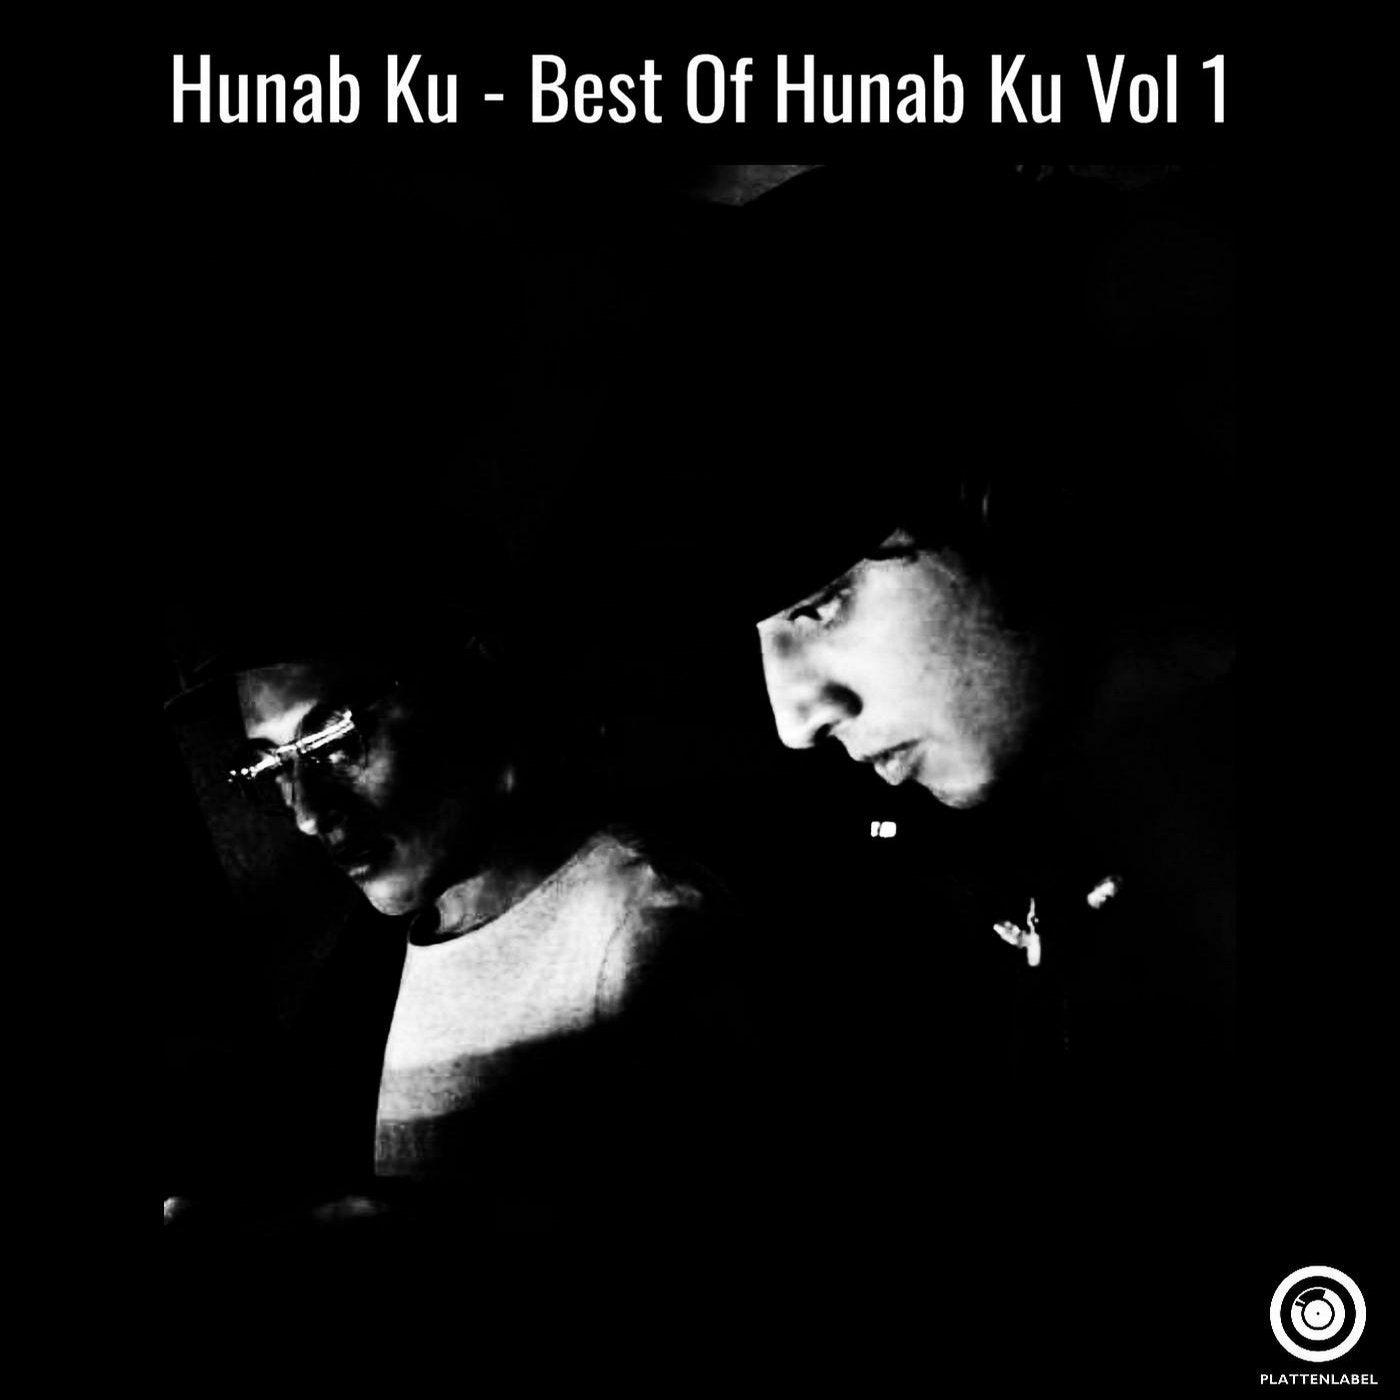 Best Of Hunab Ku Vol 1